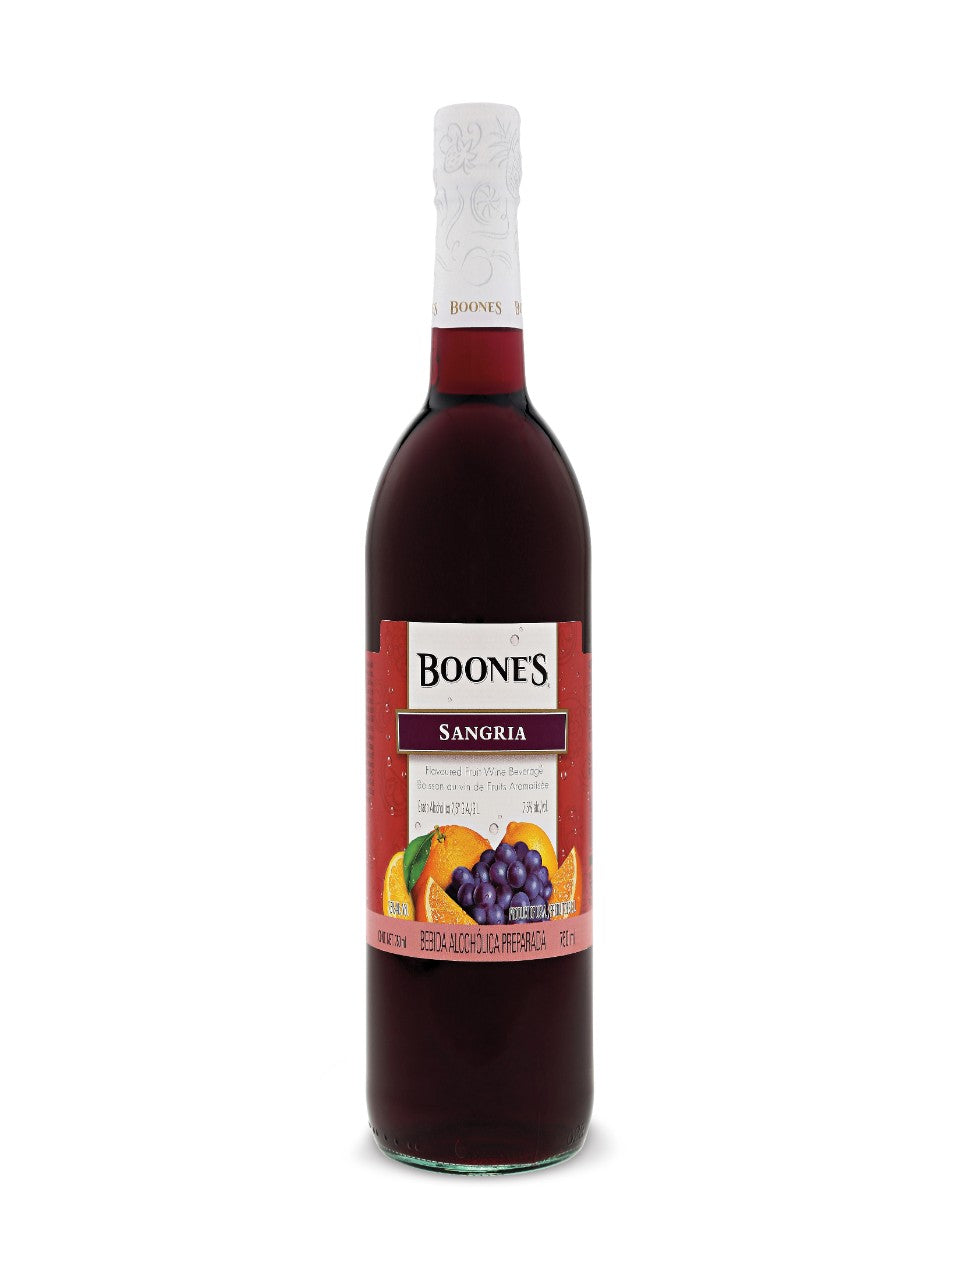 Boone's Sangria 750 mL bottle